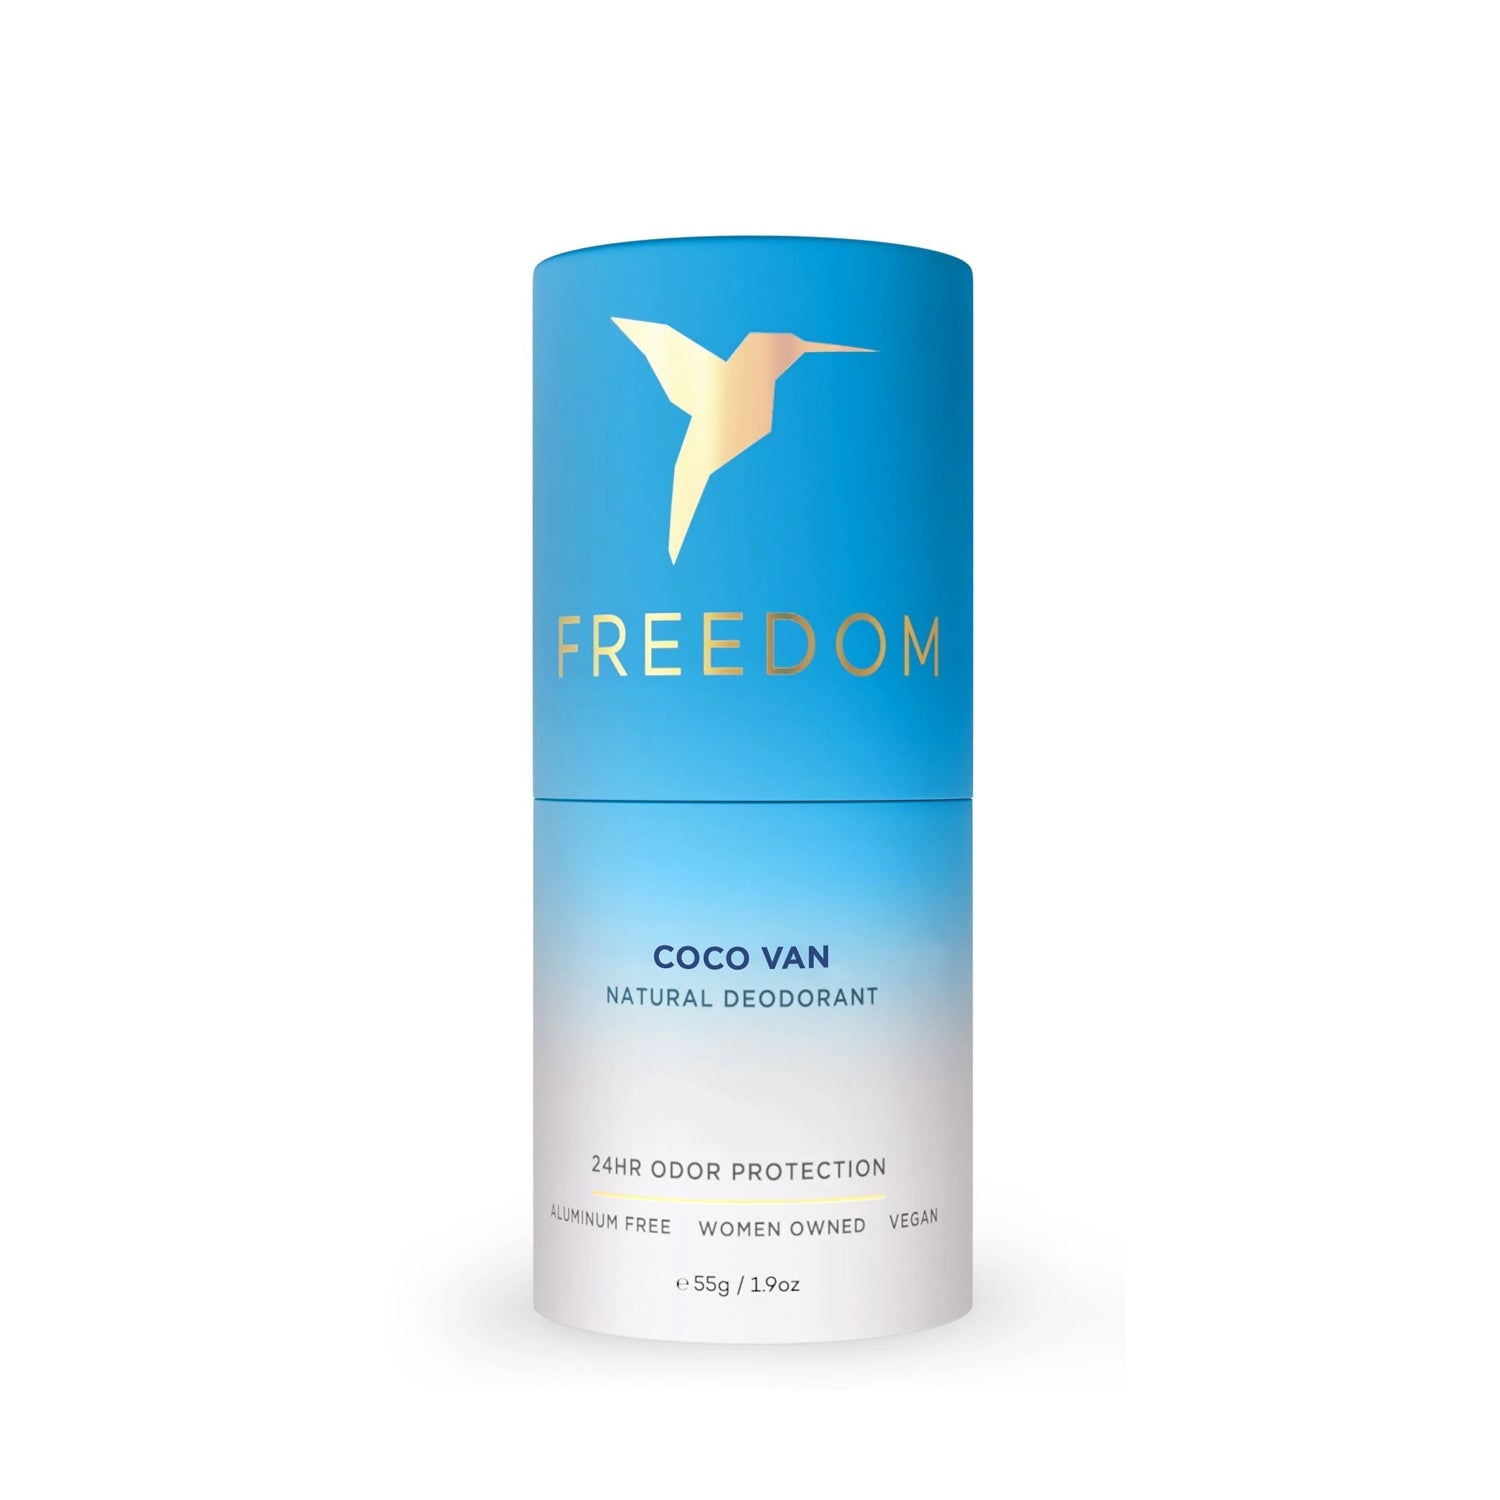 All Natural Deodorant - Eco Friendly! Deodorant Freedom Coco-Van (Eco-Friendly Paper) Single 